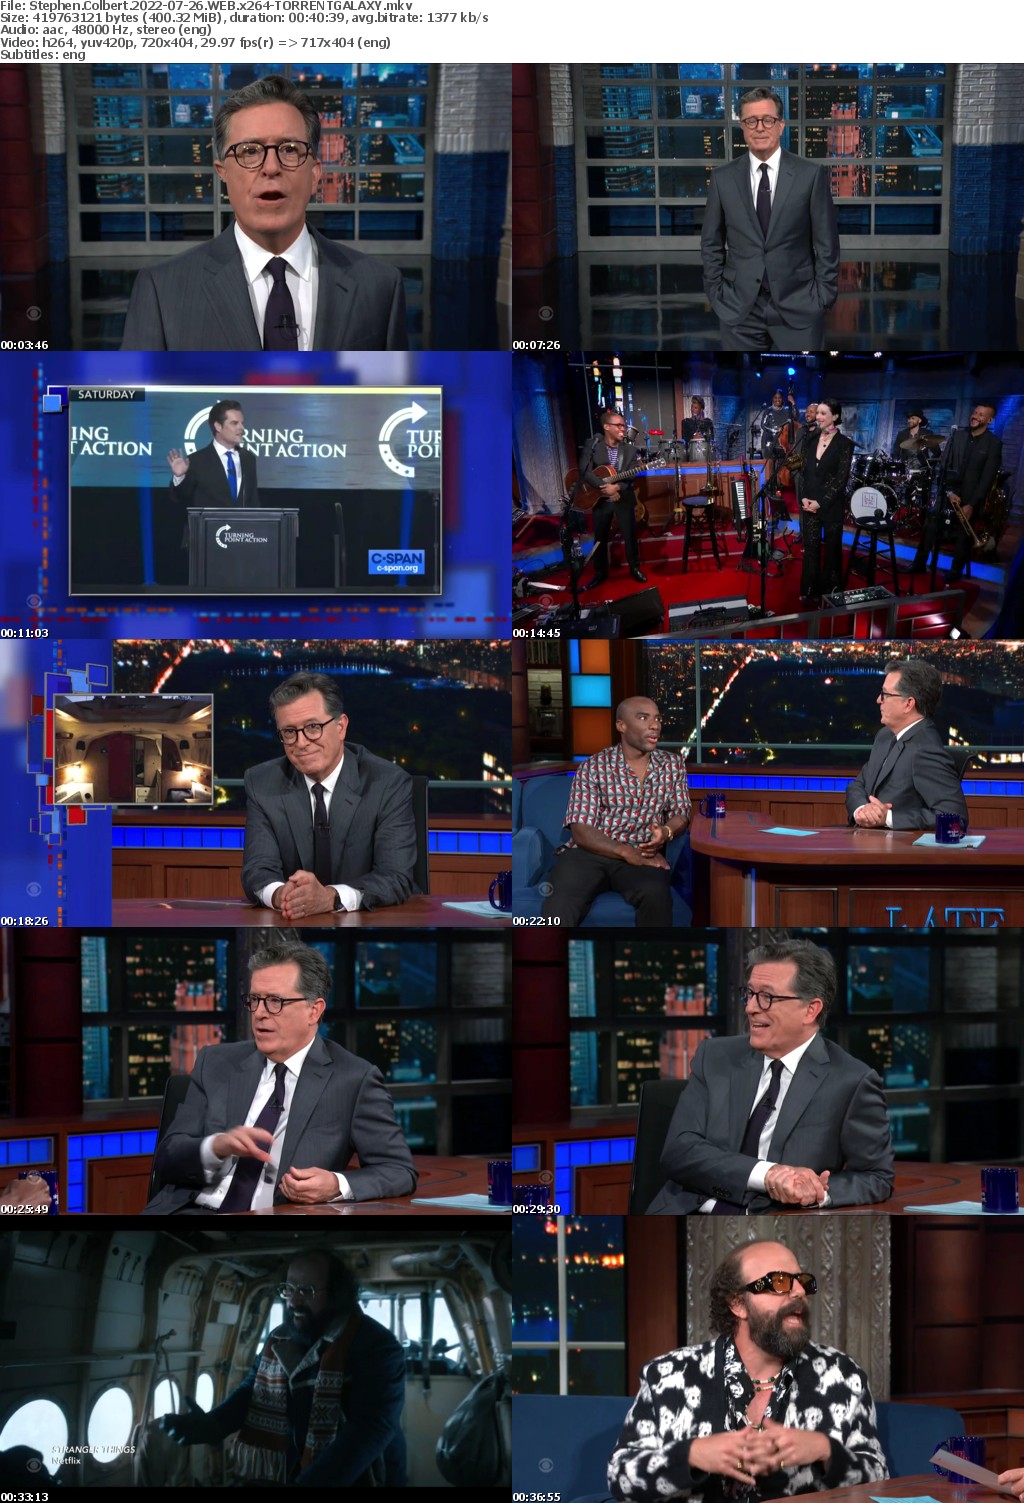 Stephen Colbert 2022-07-26 WEB x264-GALAXY